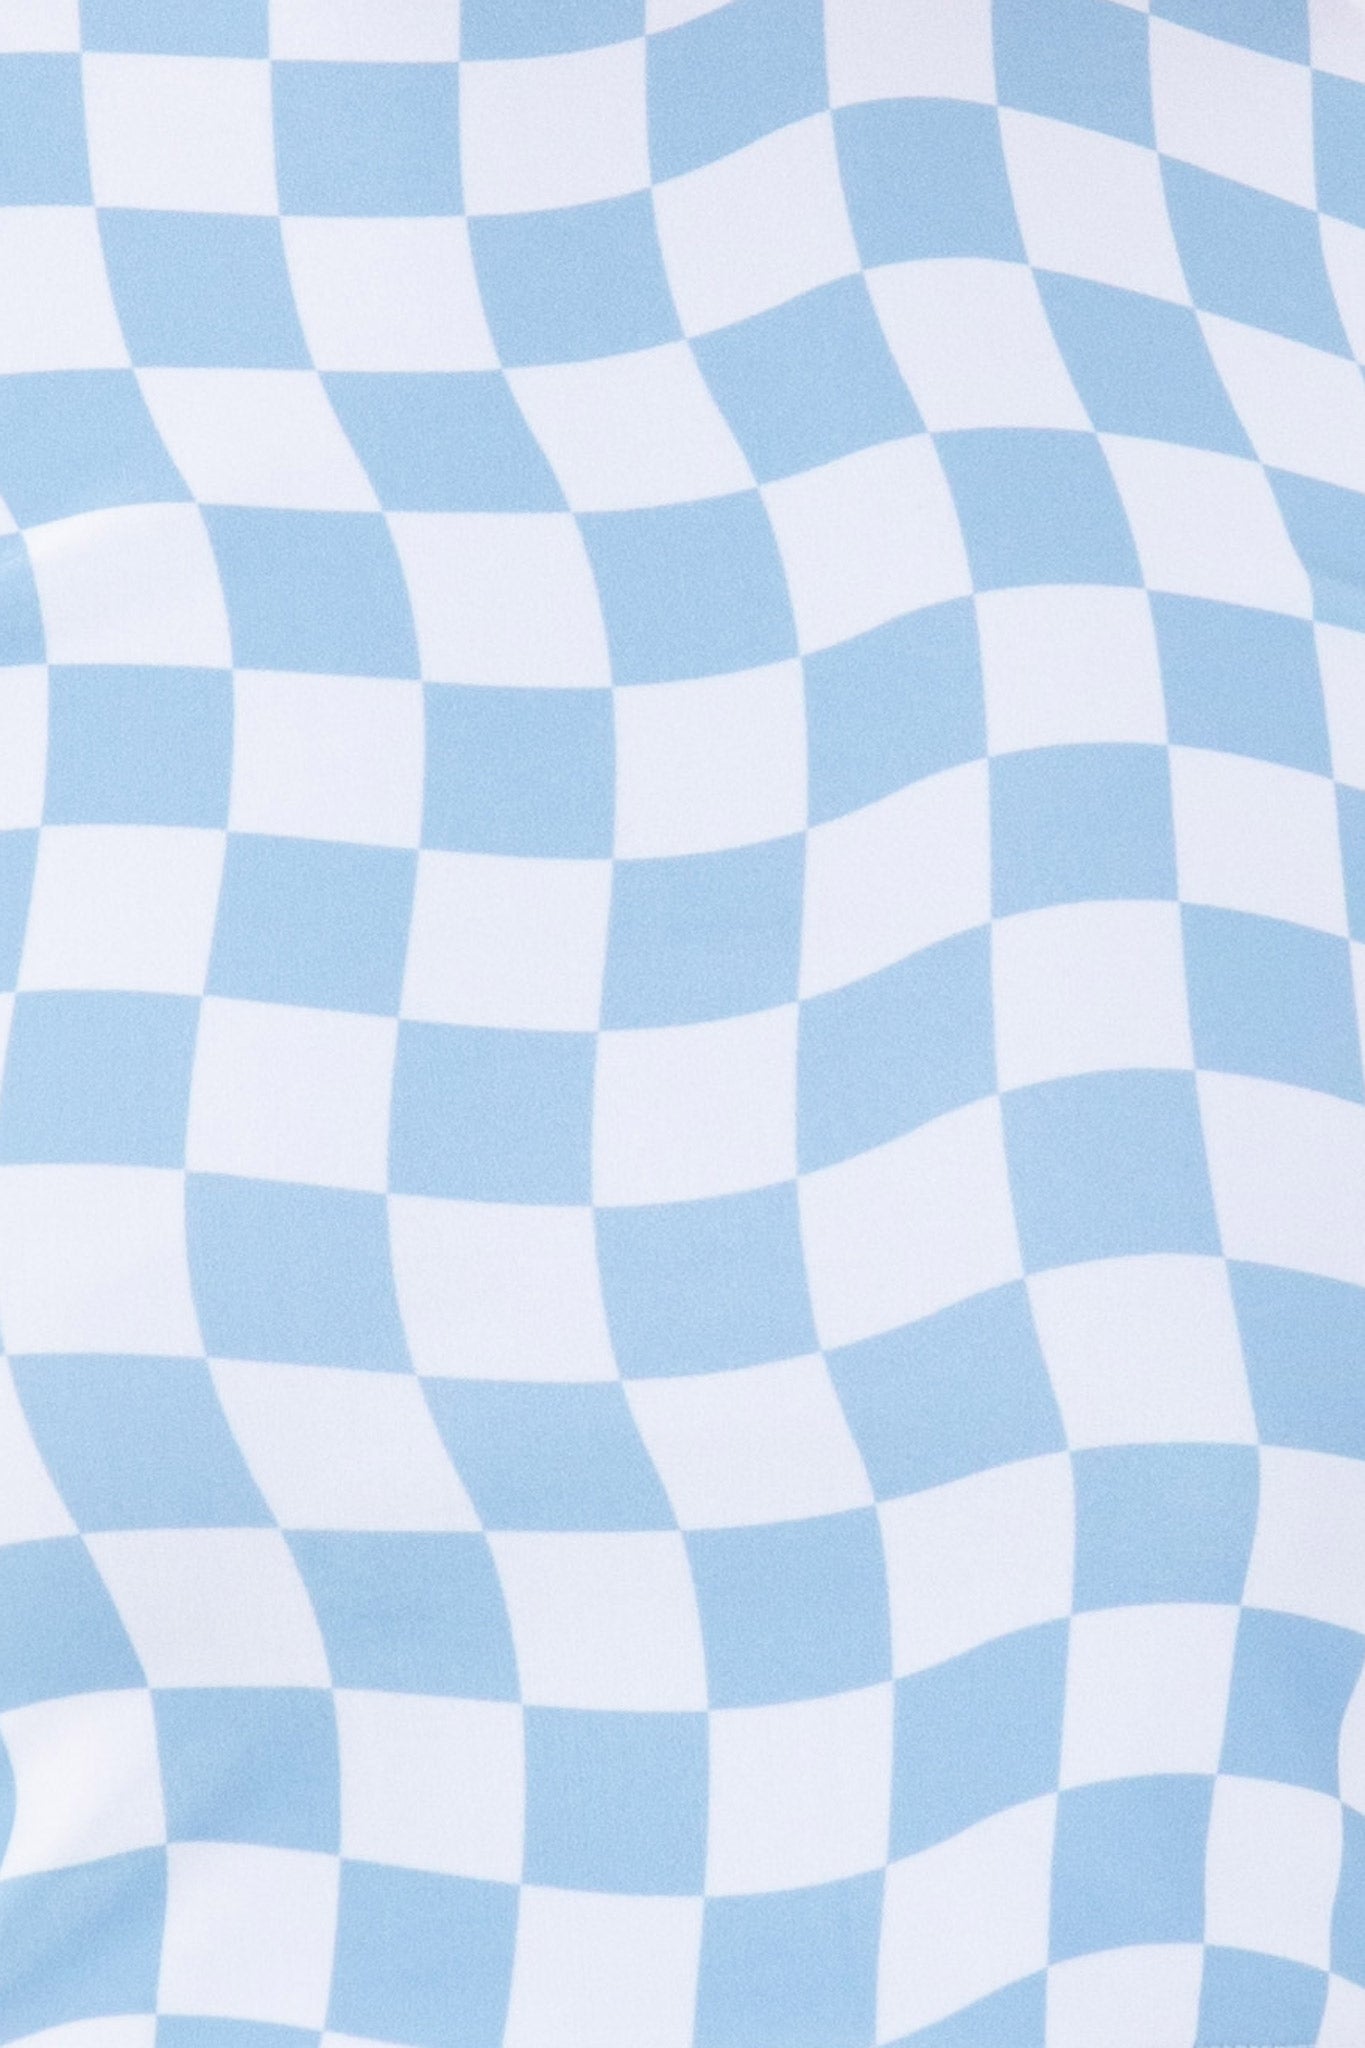 Detailed view of the Putu Bikini Bottom in blue and white checkered pattern